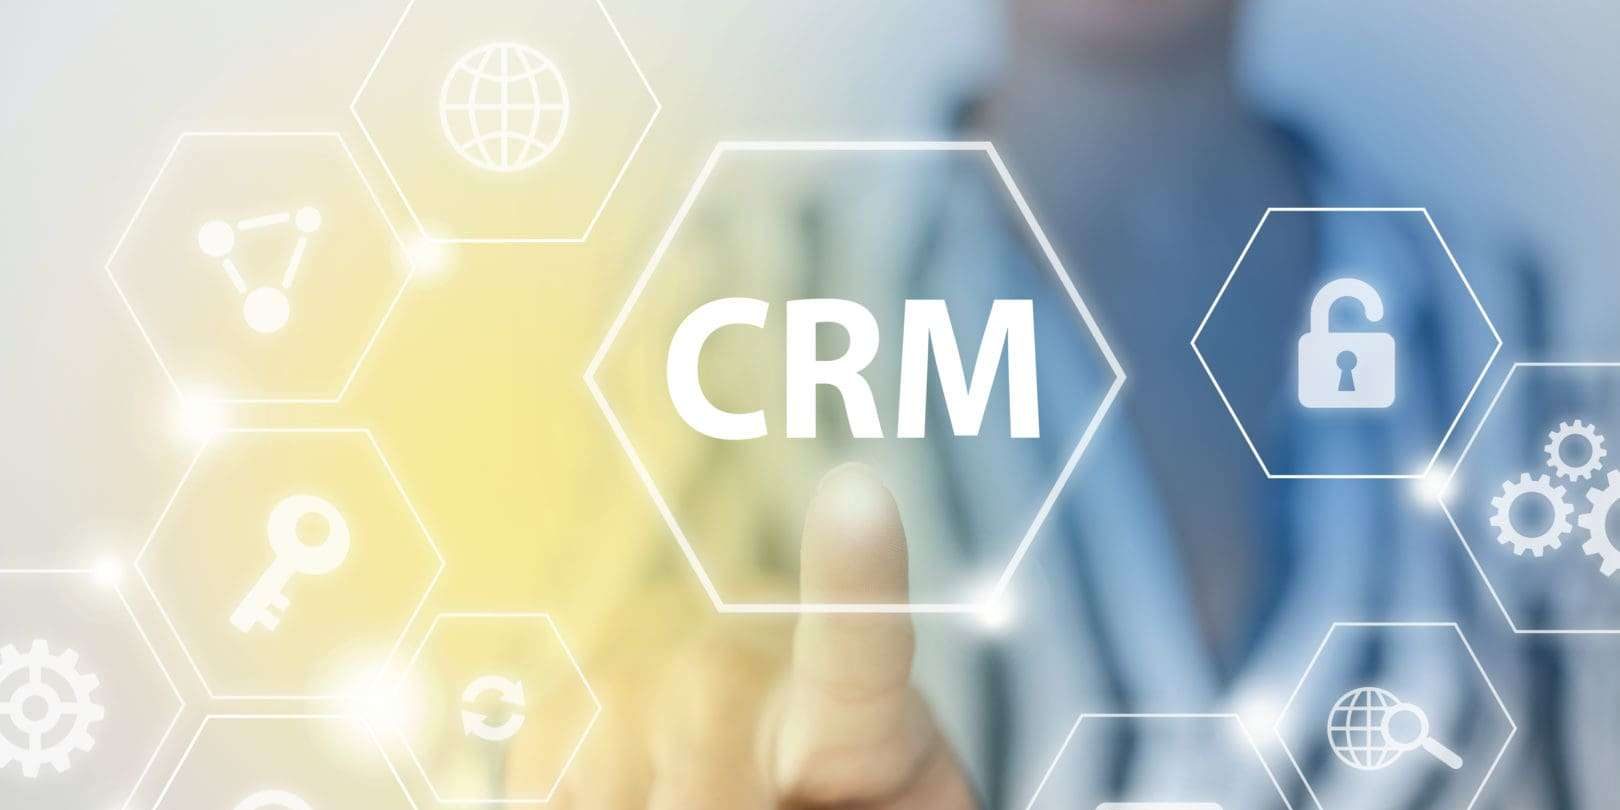 CRM software package | CRM system | Relationship management software